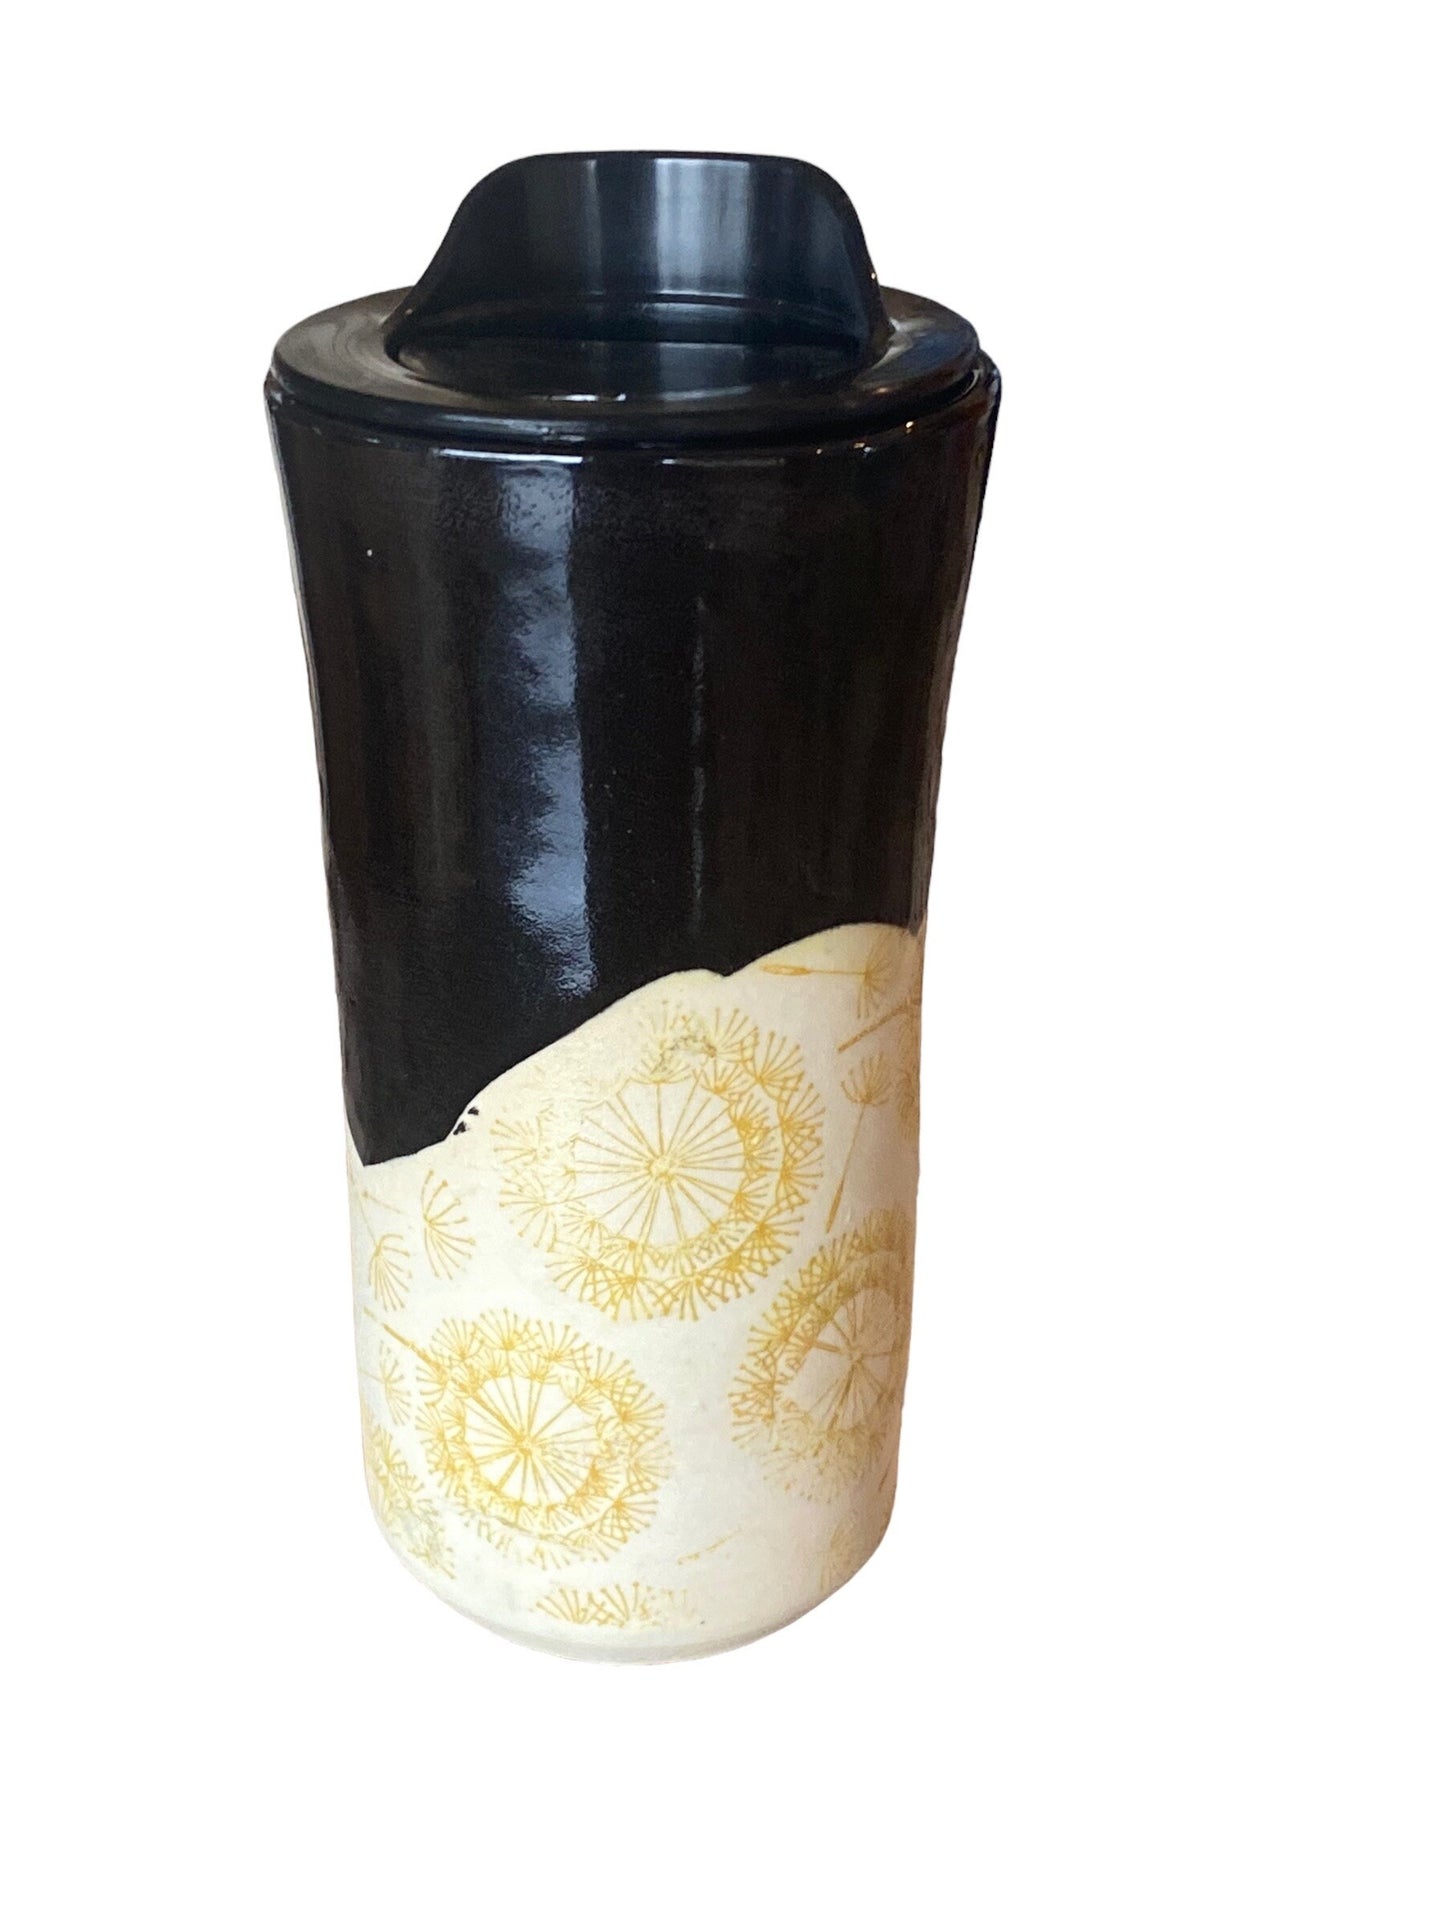 Handmade 16-Ounce Travel Mug In Gloss Black Glazes - Embellished With Dandelions - Locking Lid Included